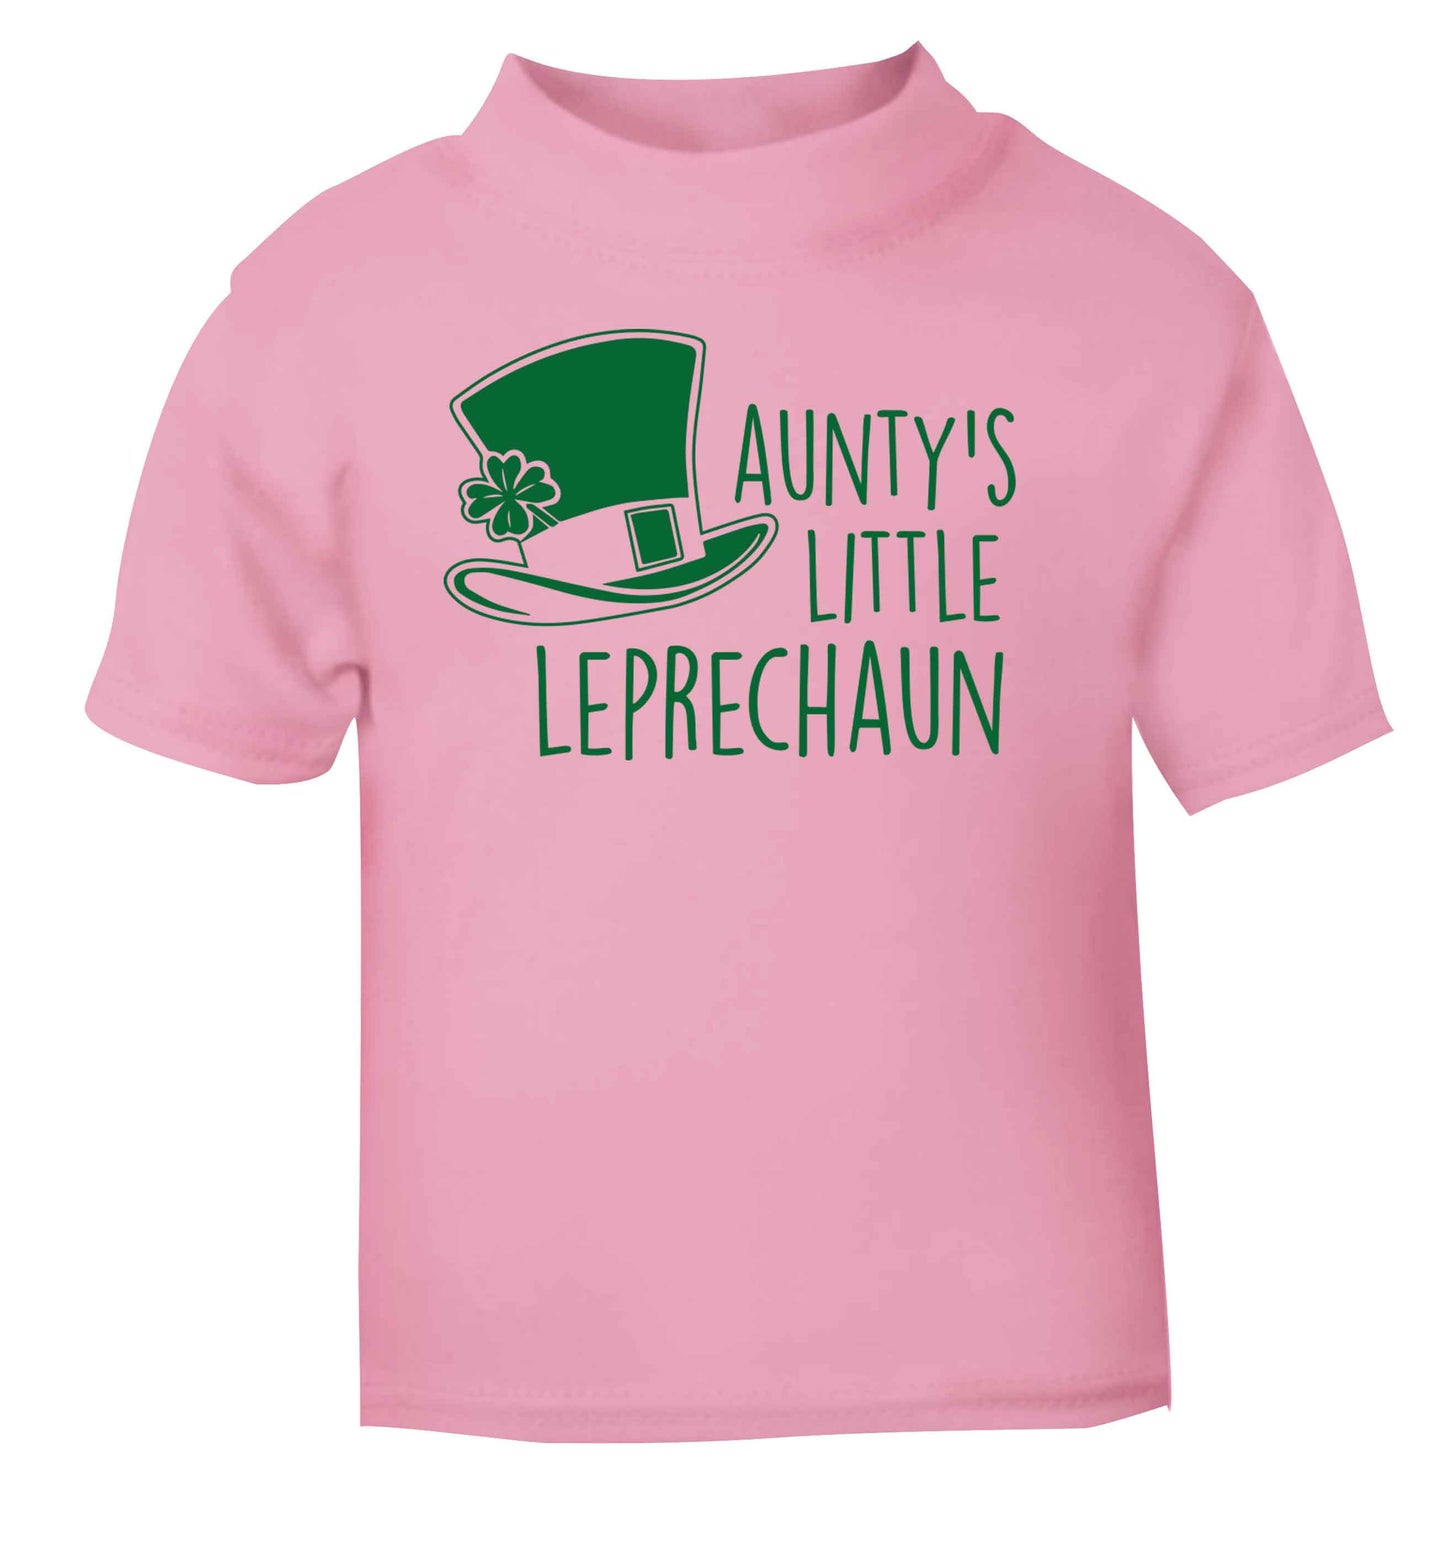 Aunty's little leprechaun light pink baby toddler Tshirt 2 Years